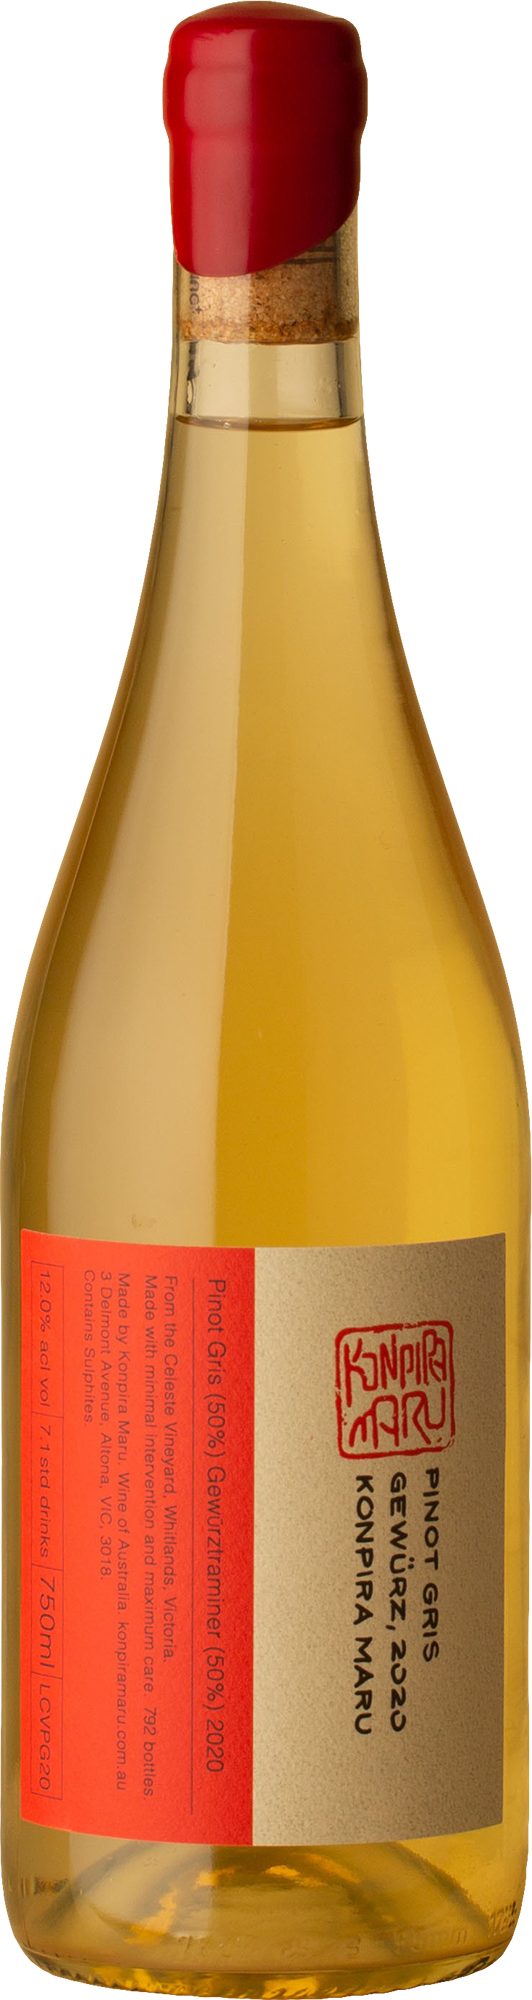 Konpira Maru - Pinot Gris / Gewürztraminer 2020 White Wine